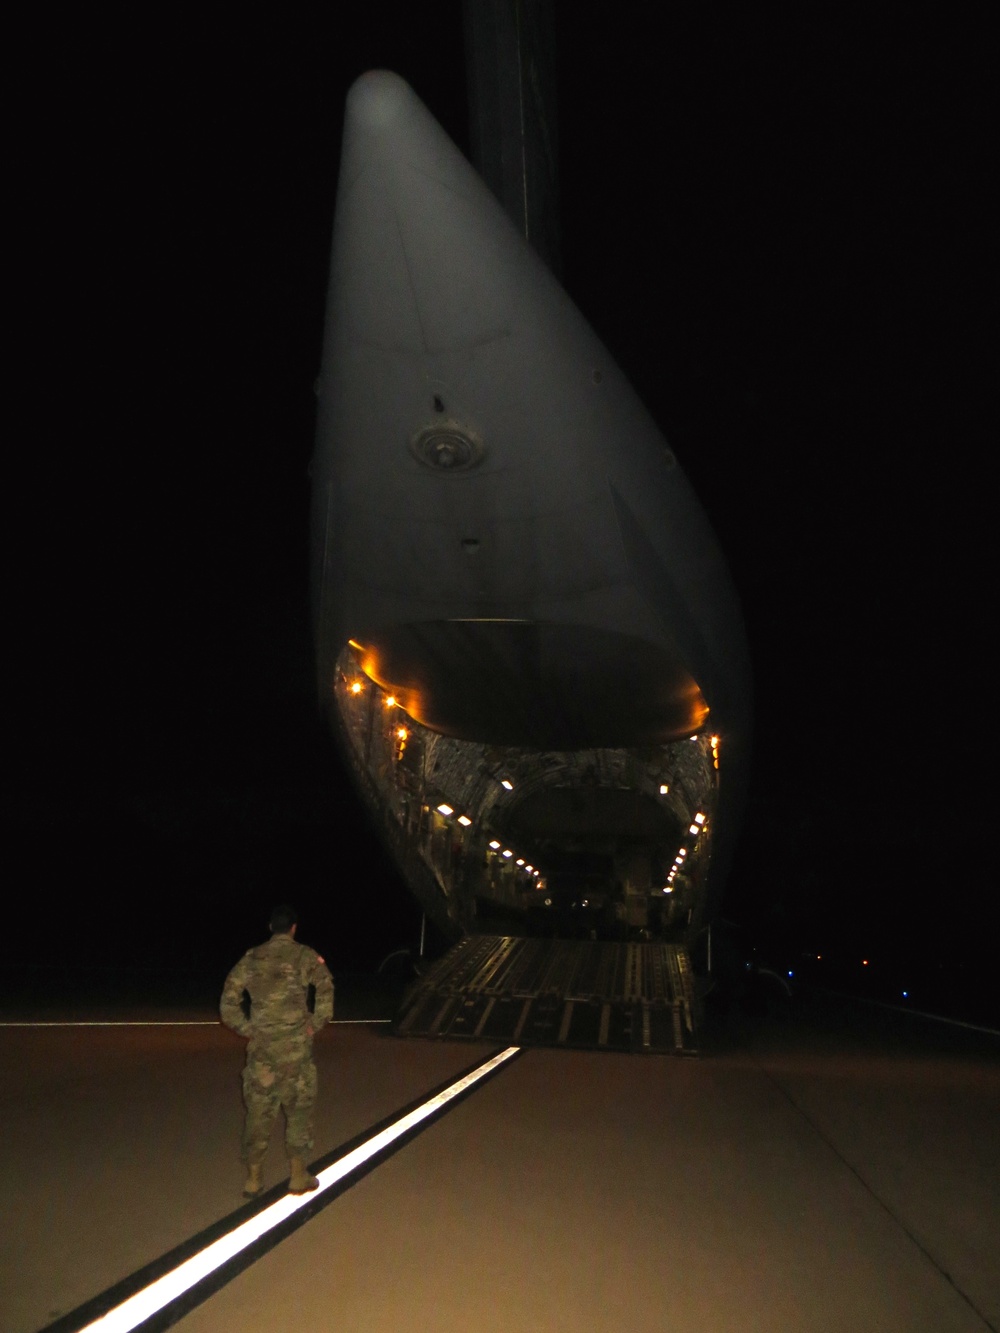 Operation Faithful Patriot arrives in southern Arizona